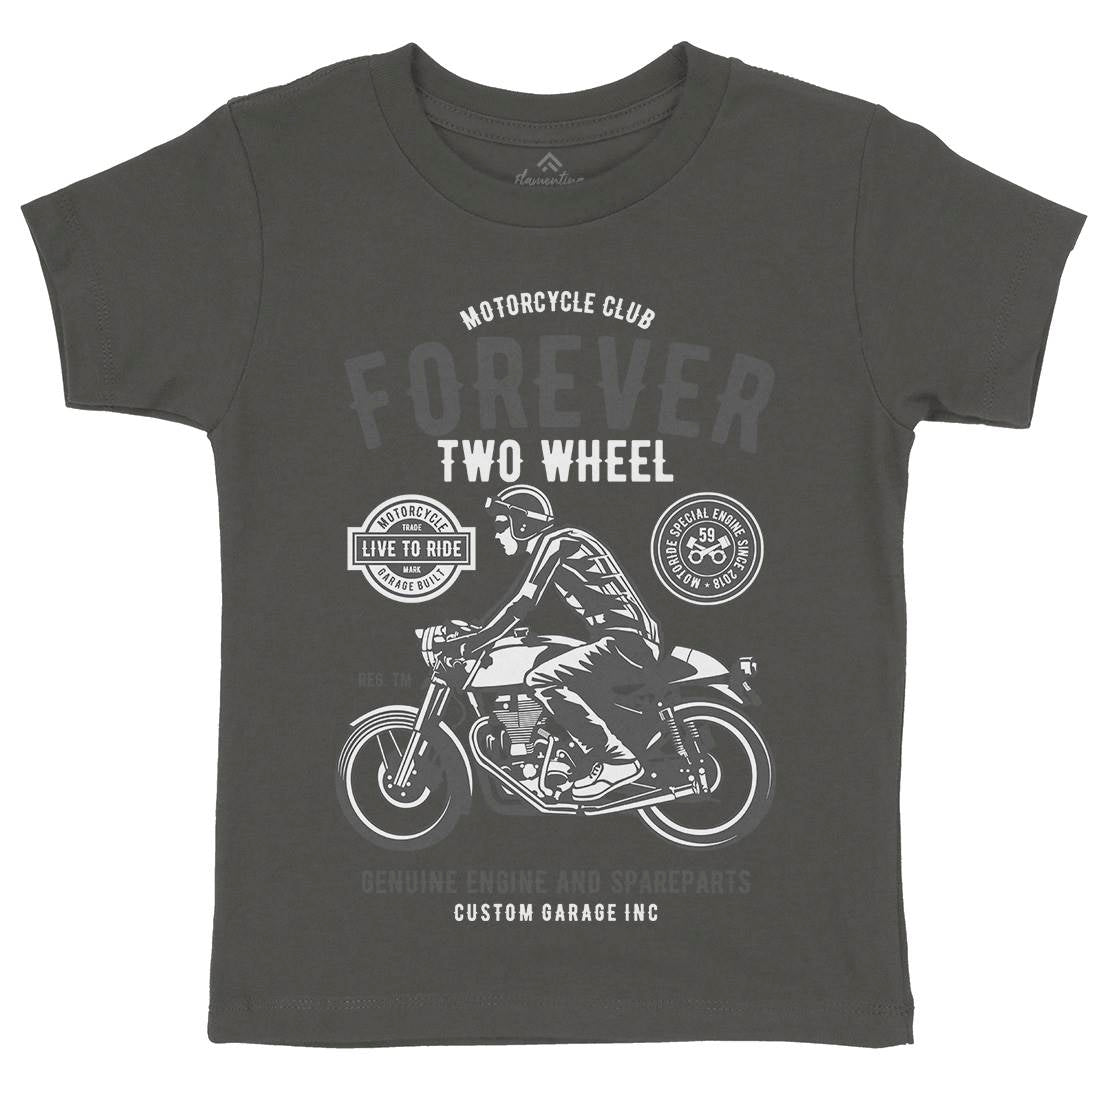 Forever Two Wheel Kids Organic Crew Neck T-Shirt Motorcycles B212